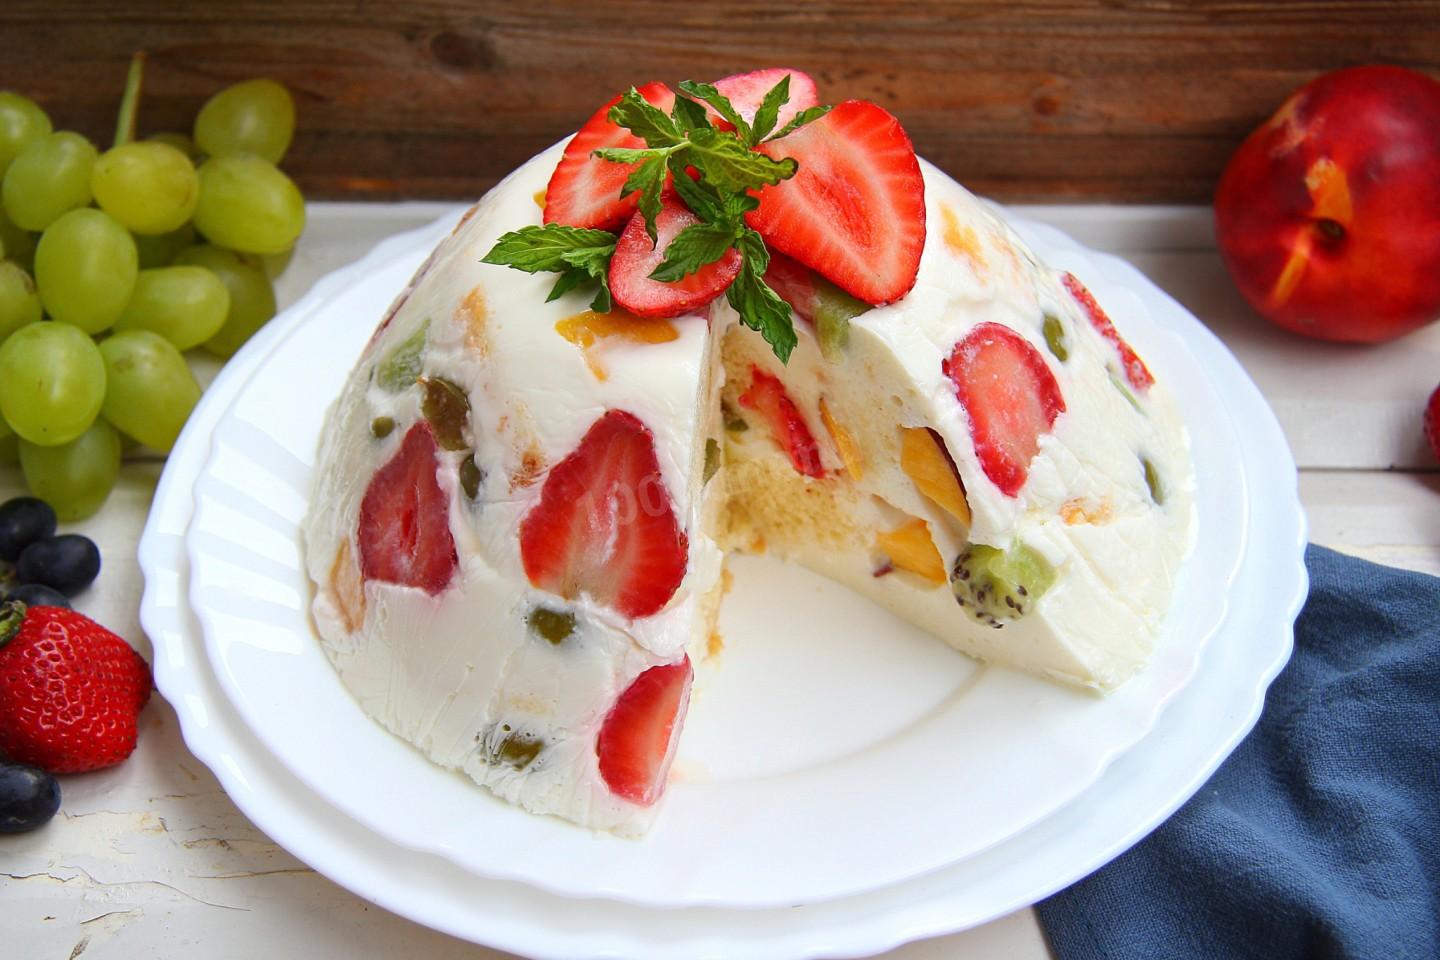 Торт с желе сверху и фруктами рецепт с фото